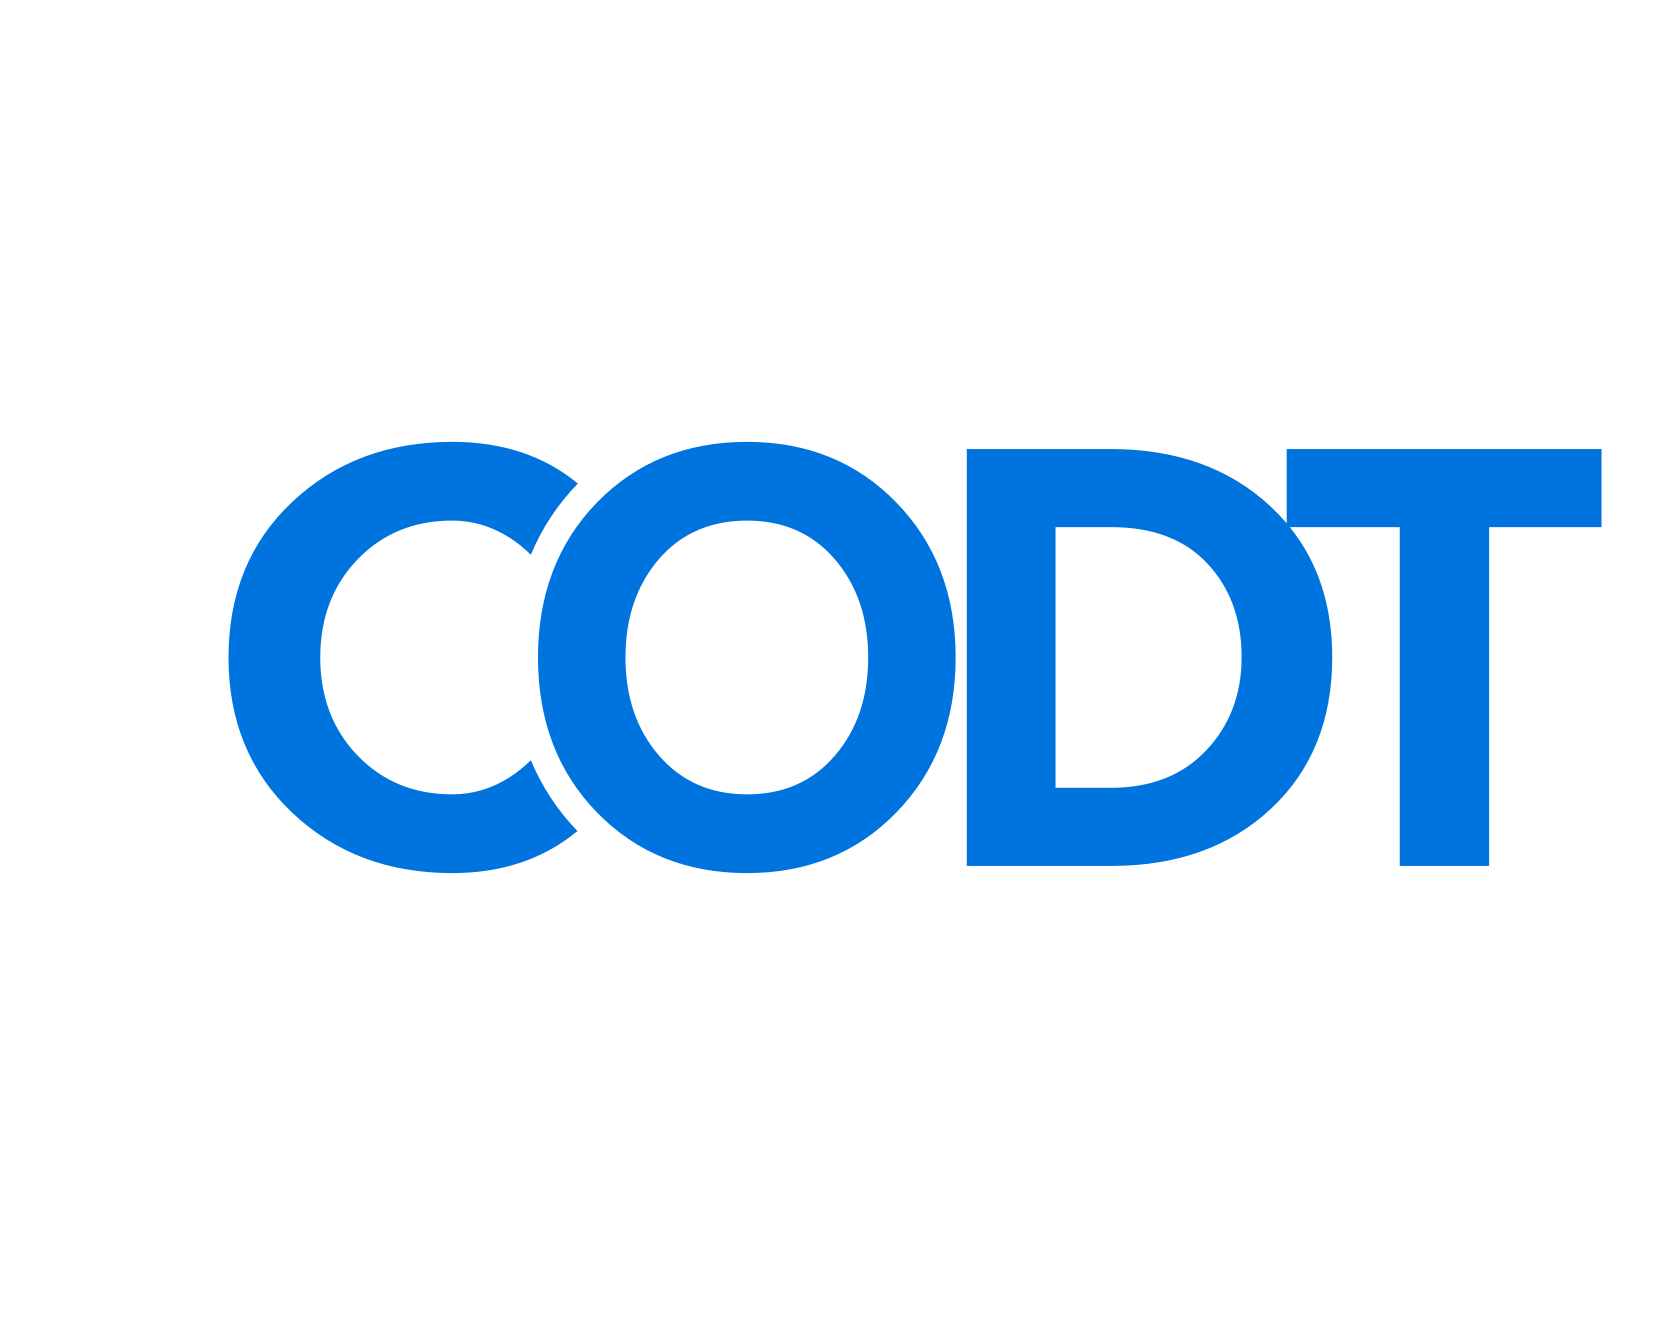 CODT Logo Blue Version